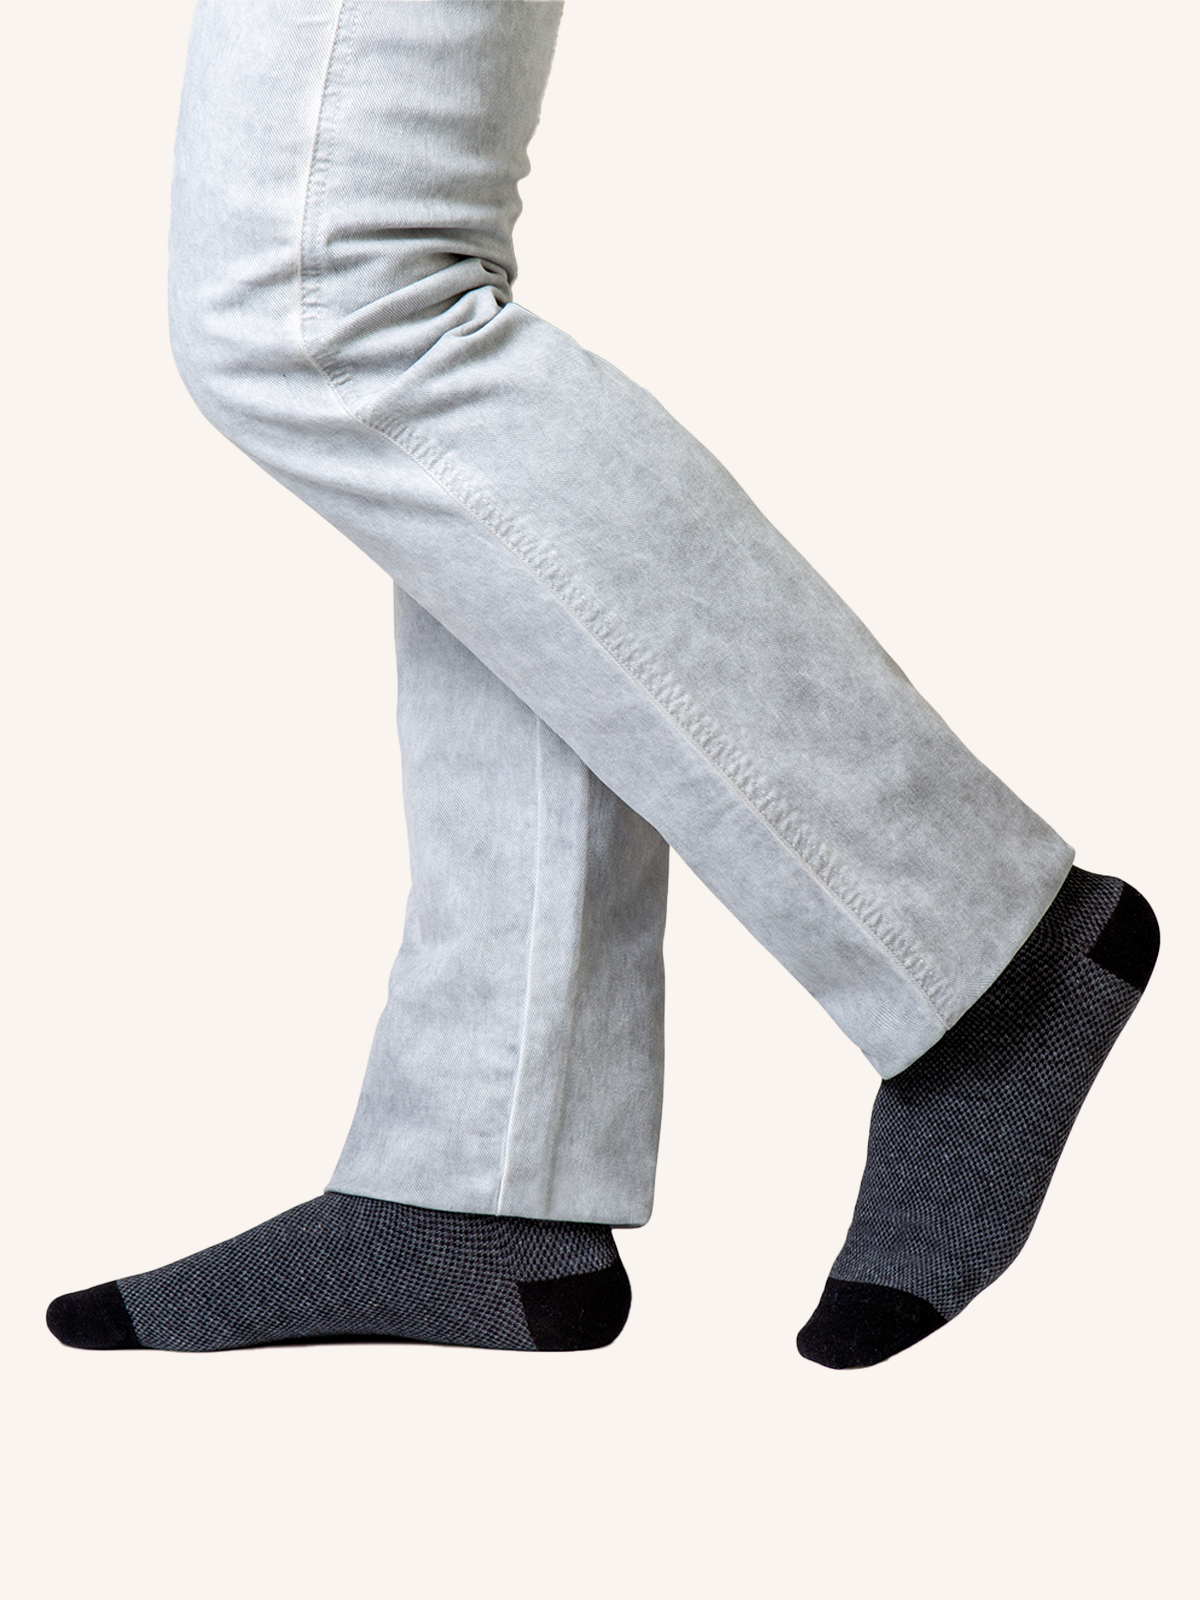 Long Socks in Jacquard Cotton for Men | Plain Color | Pack of 3 pairs | Jack L